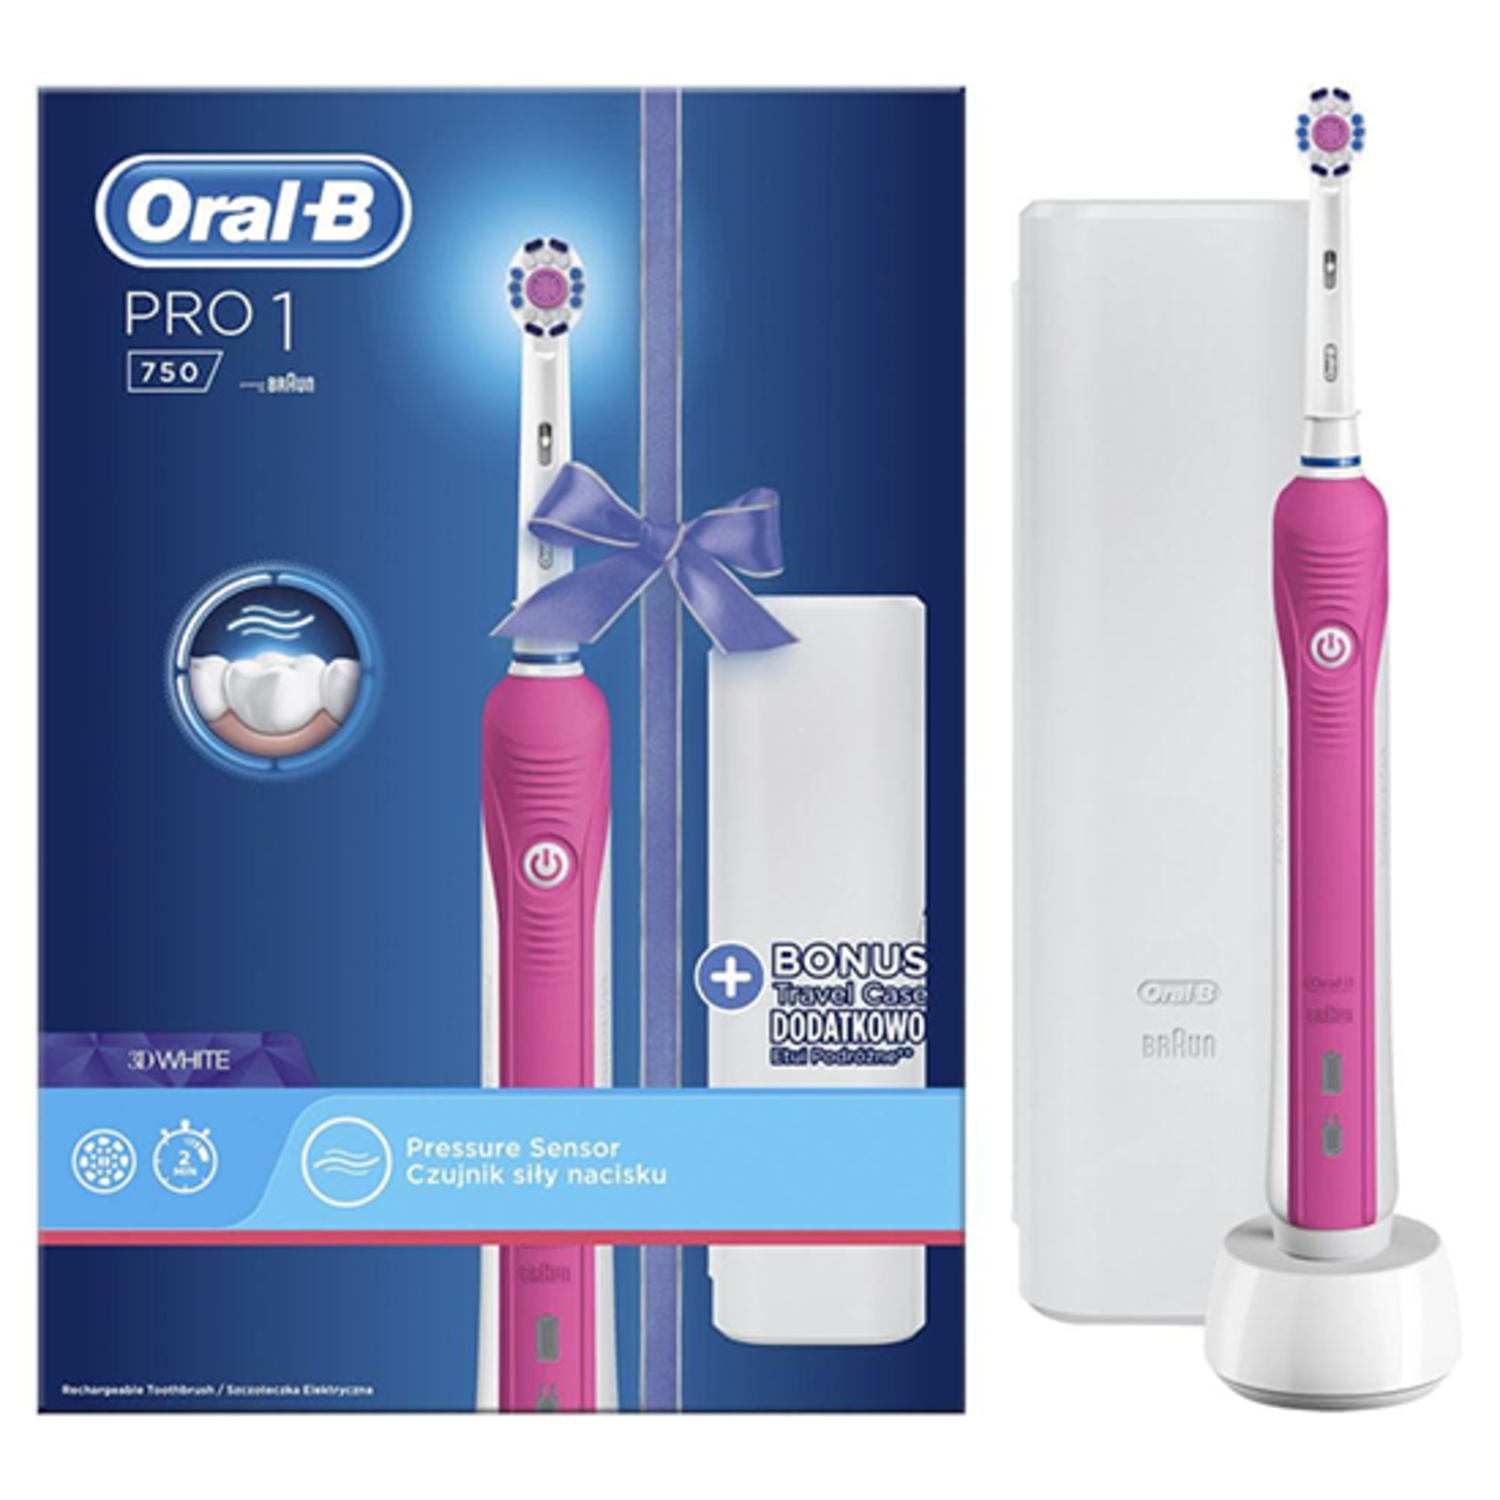 Oral-B PRO Edition 1 34,85€ | 750 + Reiseetui Pink